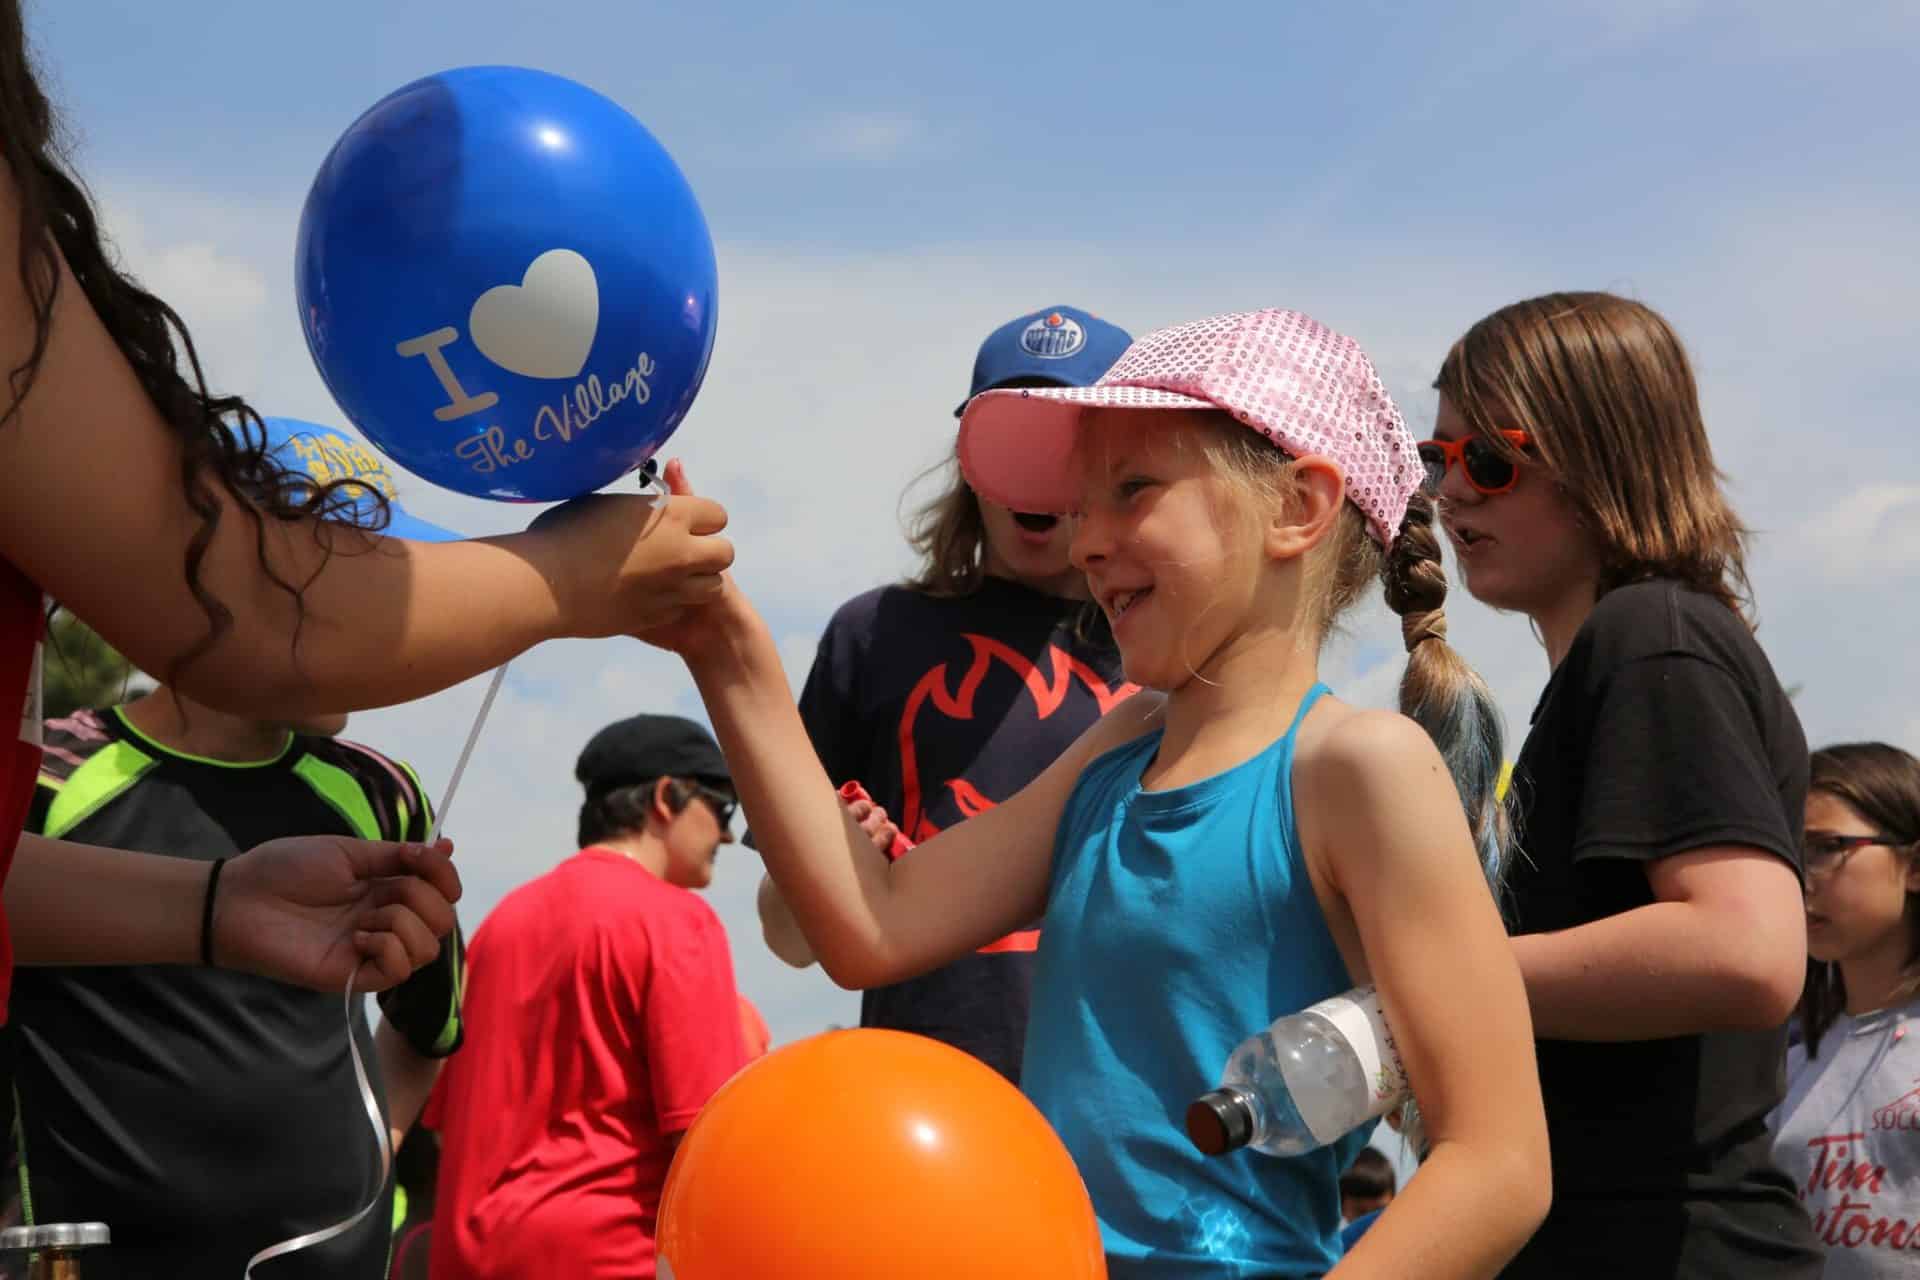 little girl getting a griesbach balloon Une petite fille qui reçoit un ballon « Griesbach ».